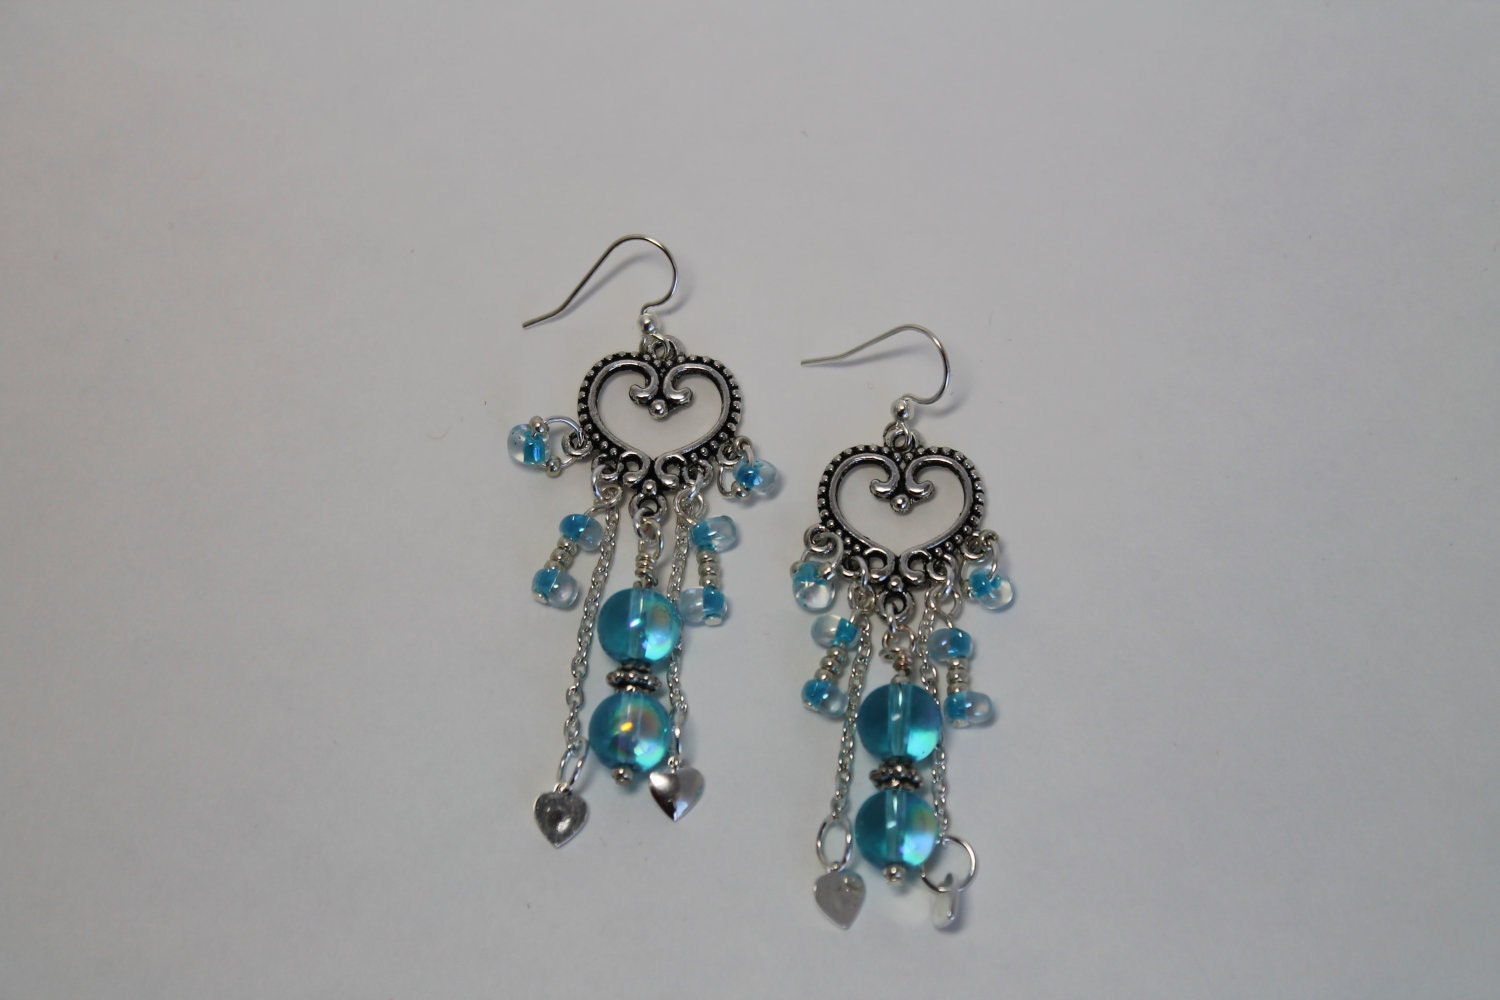 Chandelier Heart Earrings With Aqua Blue Glass Beads - Etsy